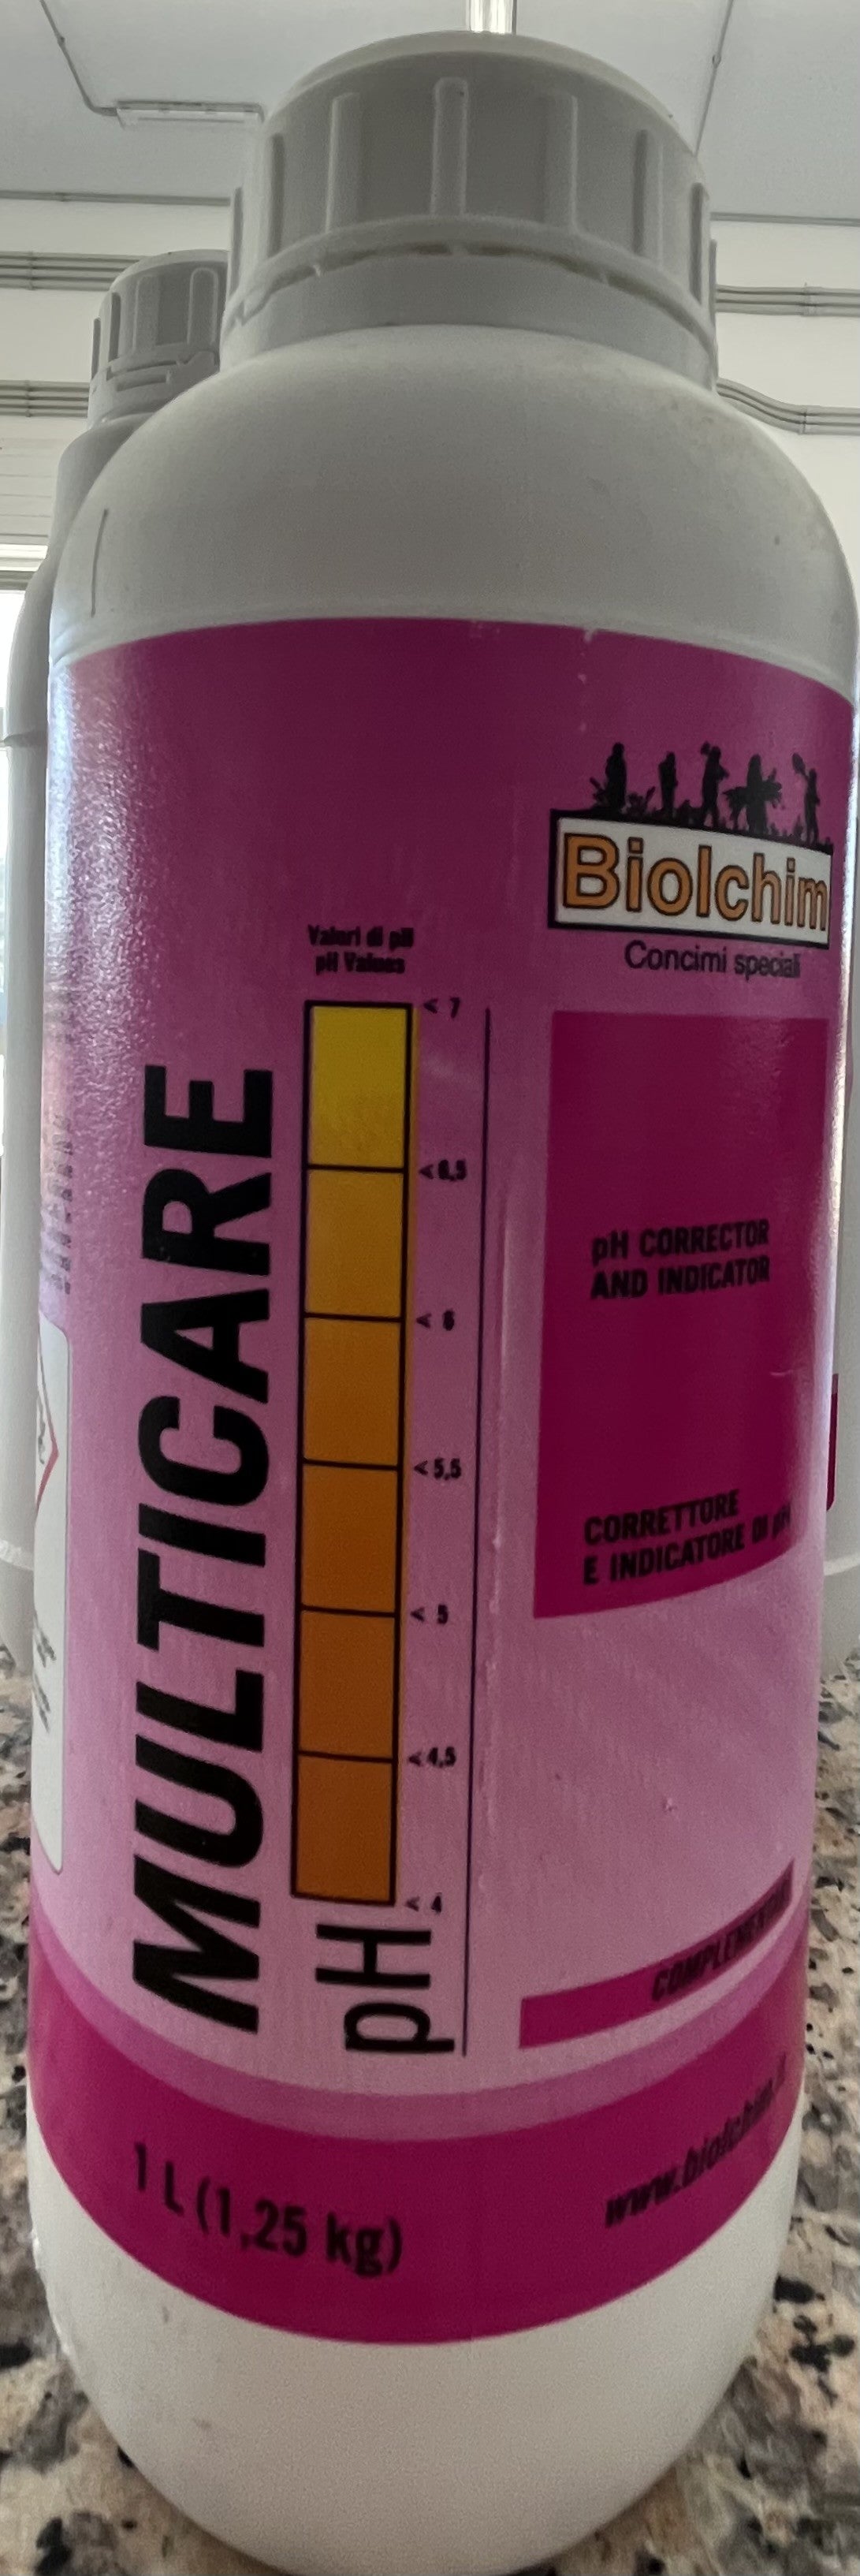 Biolchim - Multicare - pH - Concime - Liquido - Corettore - Indicatore